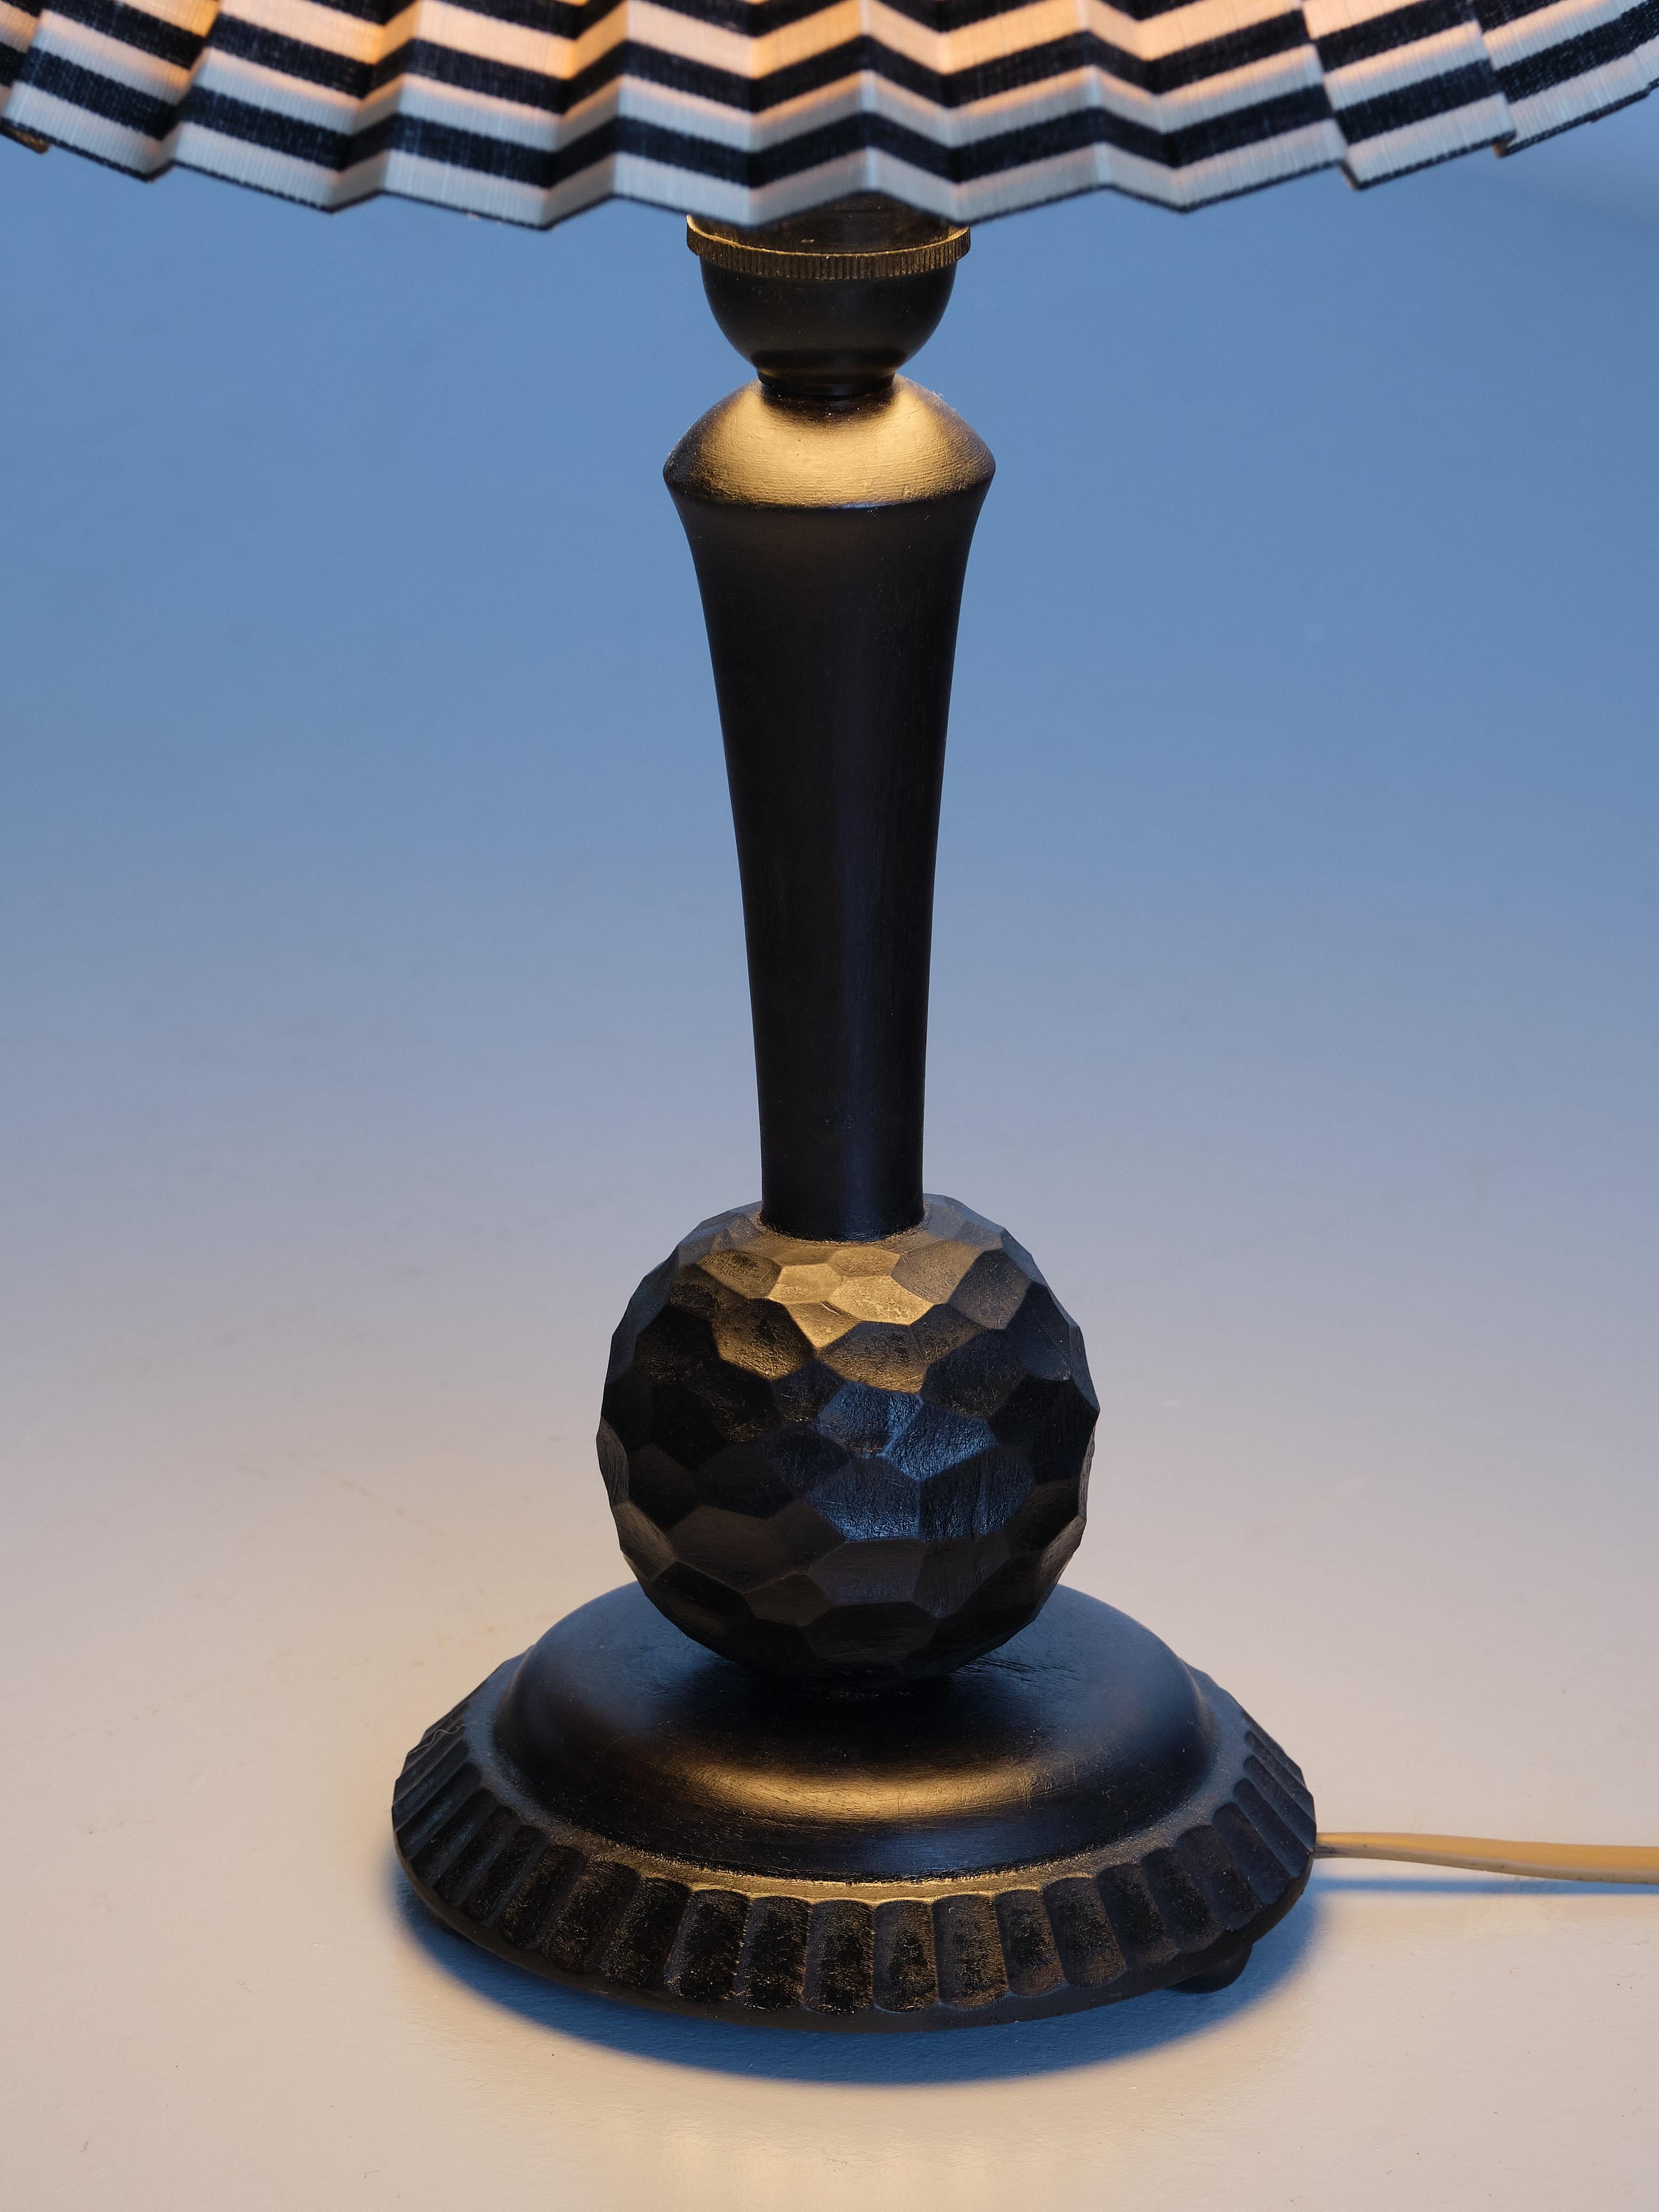 Cotton Swedish Grace Table Lamp in Carved Wood, Svenskt Tenn Shade, Sweden, 1930s For Sale